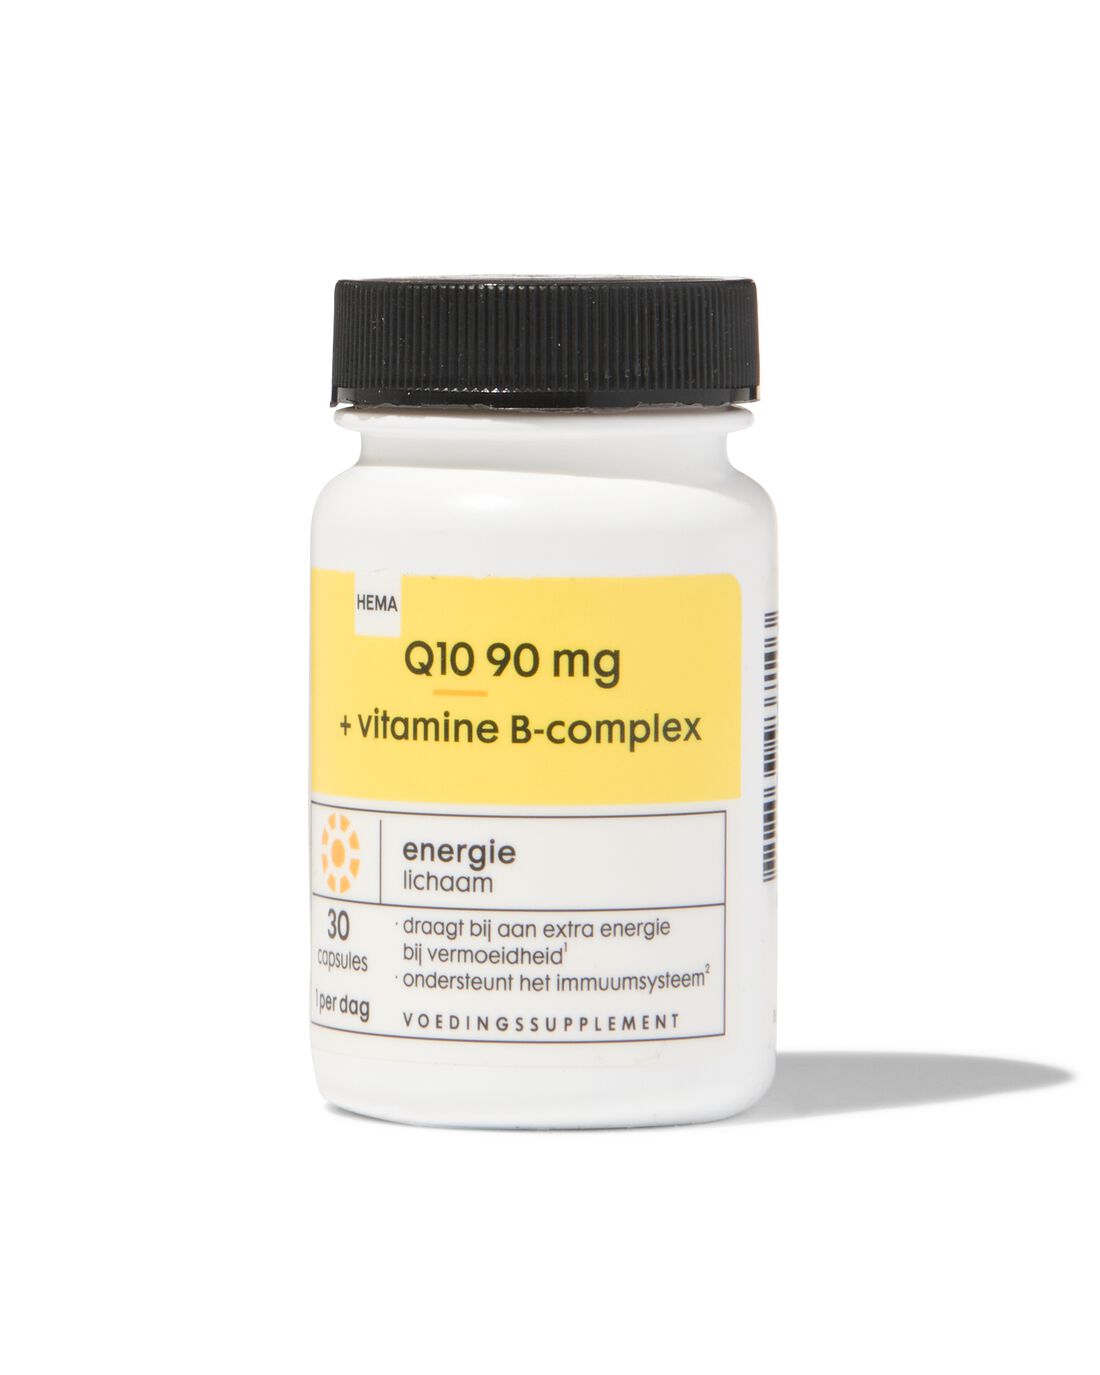 HEMA Q10 90 Mg + Vitamine B-complex - 30 Stuks